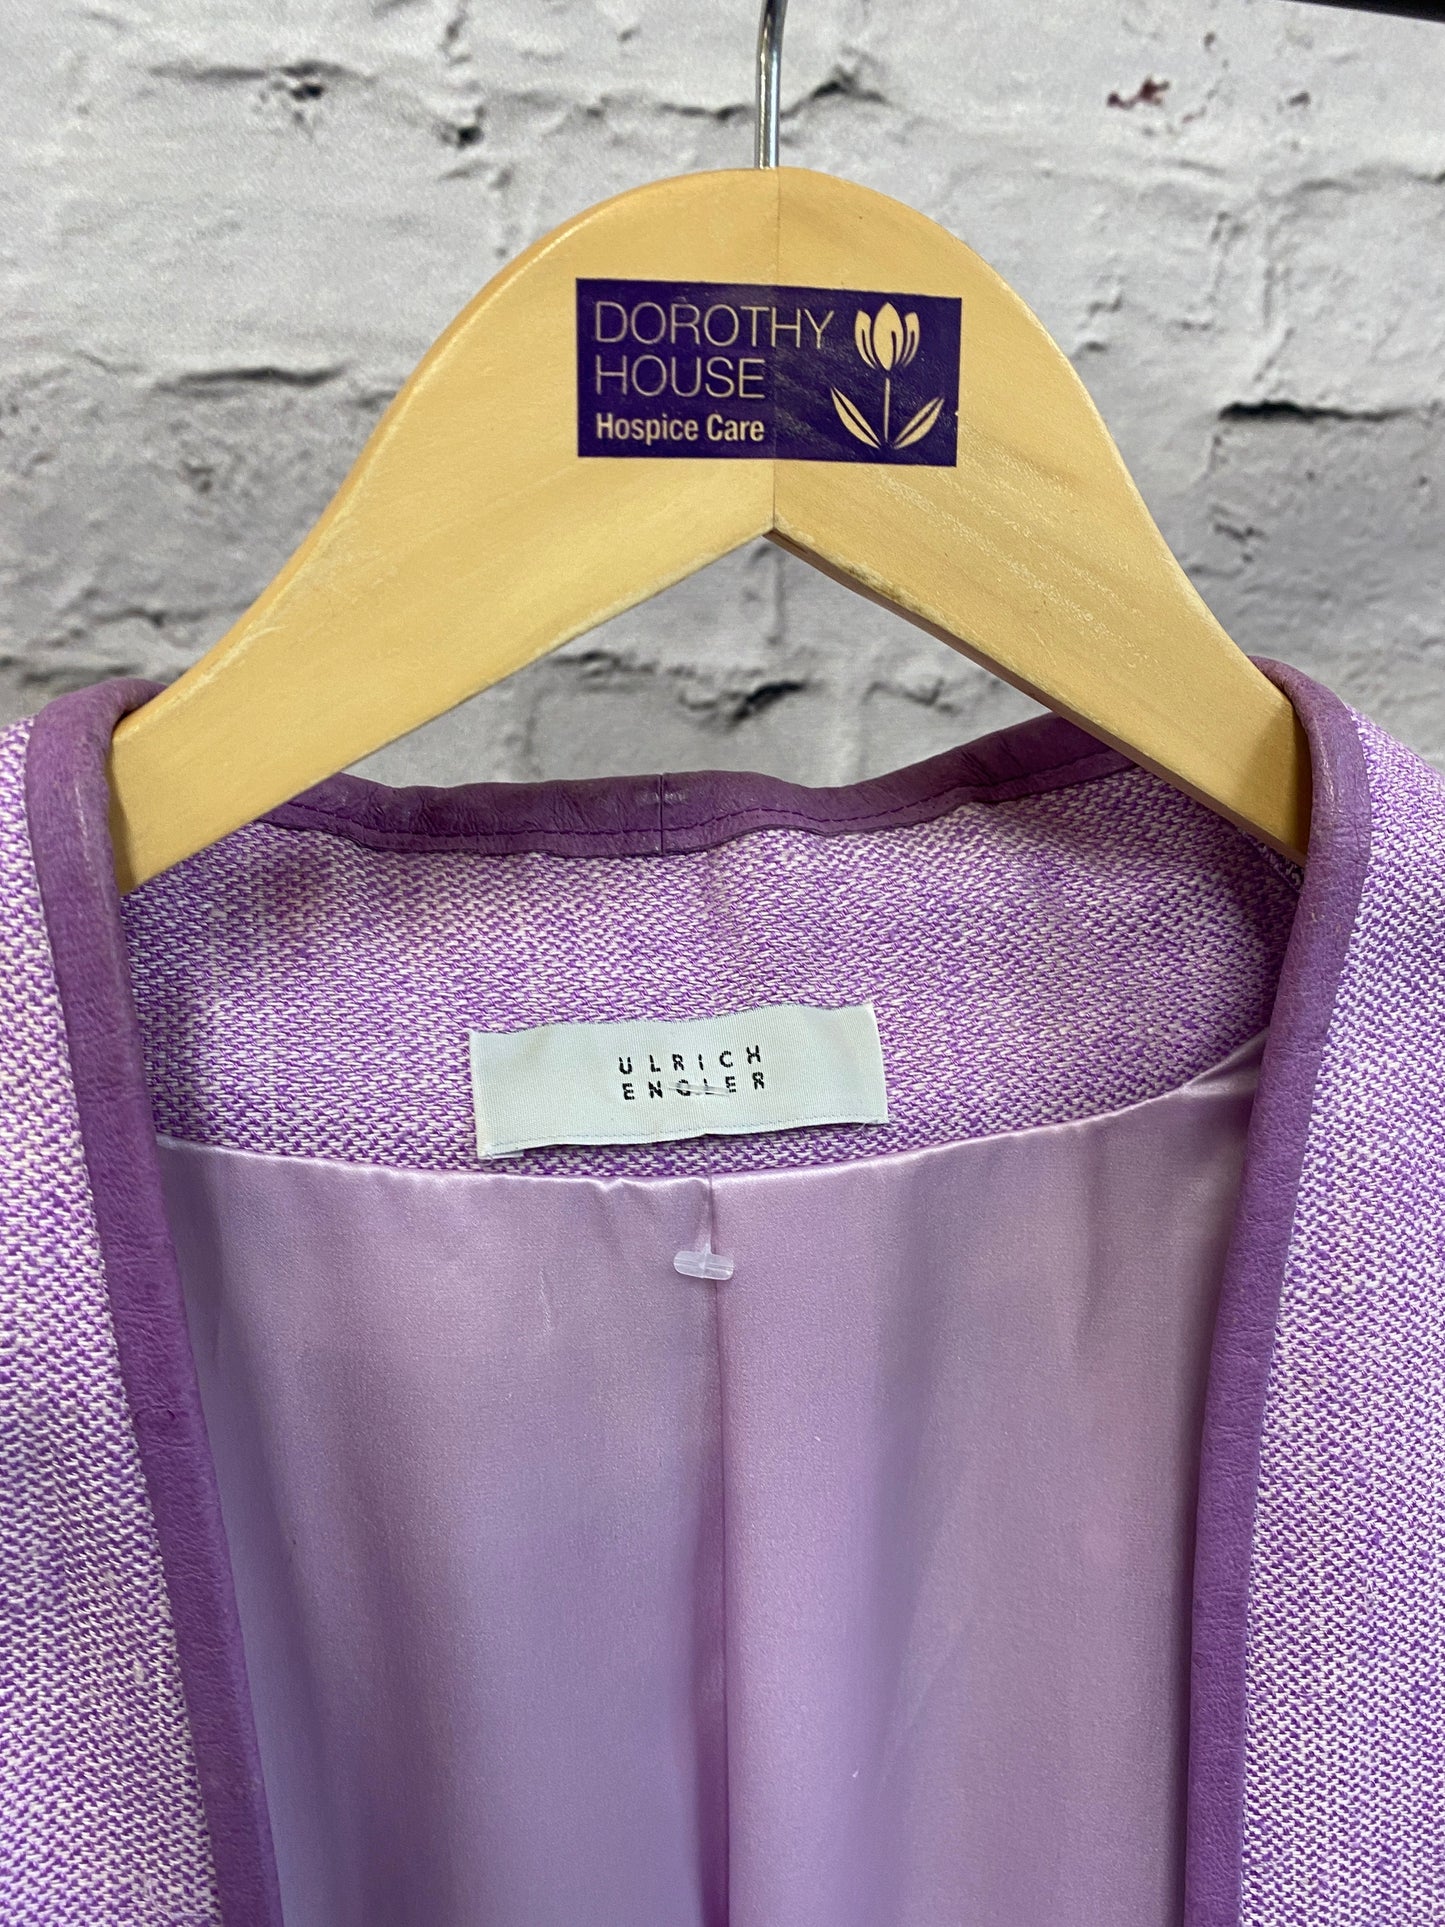 Lilac Formal Jacket | Blazer Size M/L